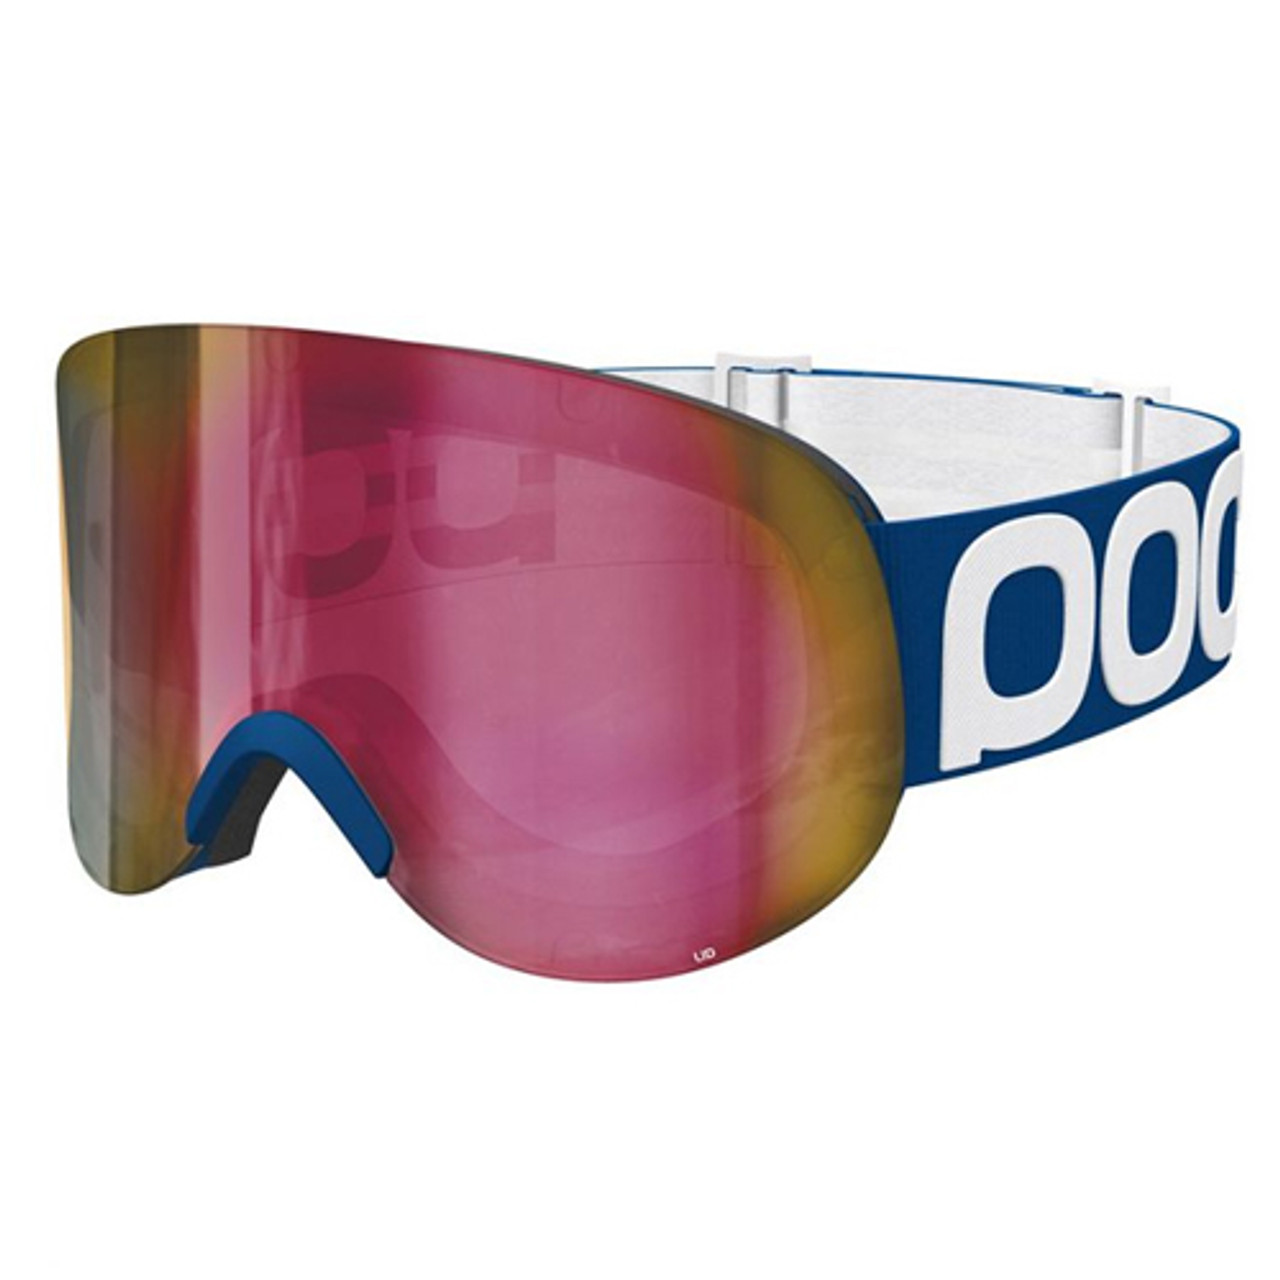 Lens for POC Lid Ski Goggles